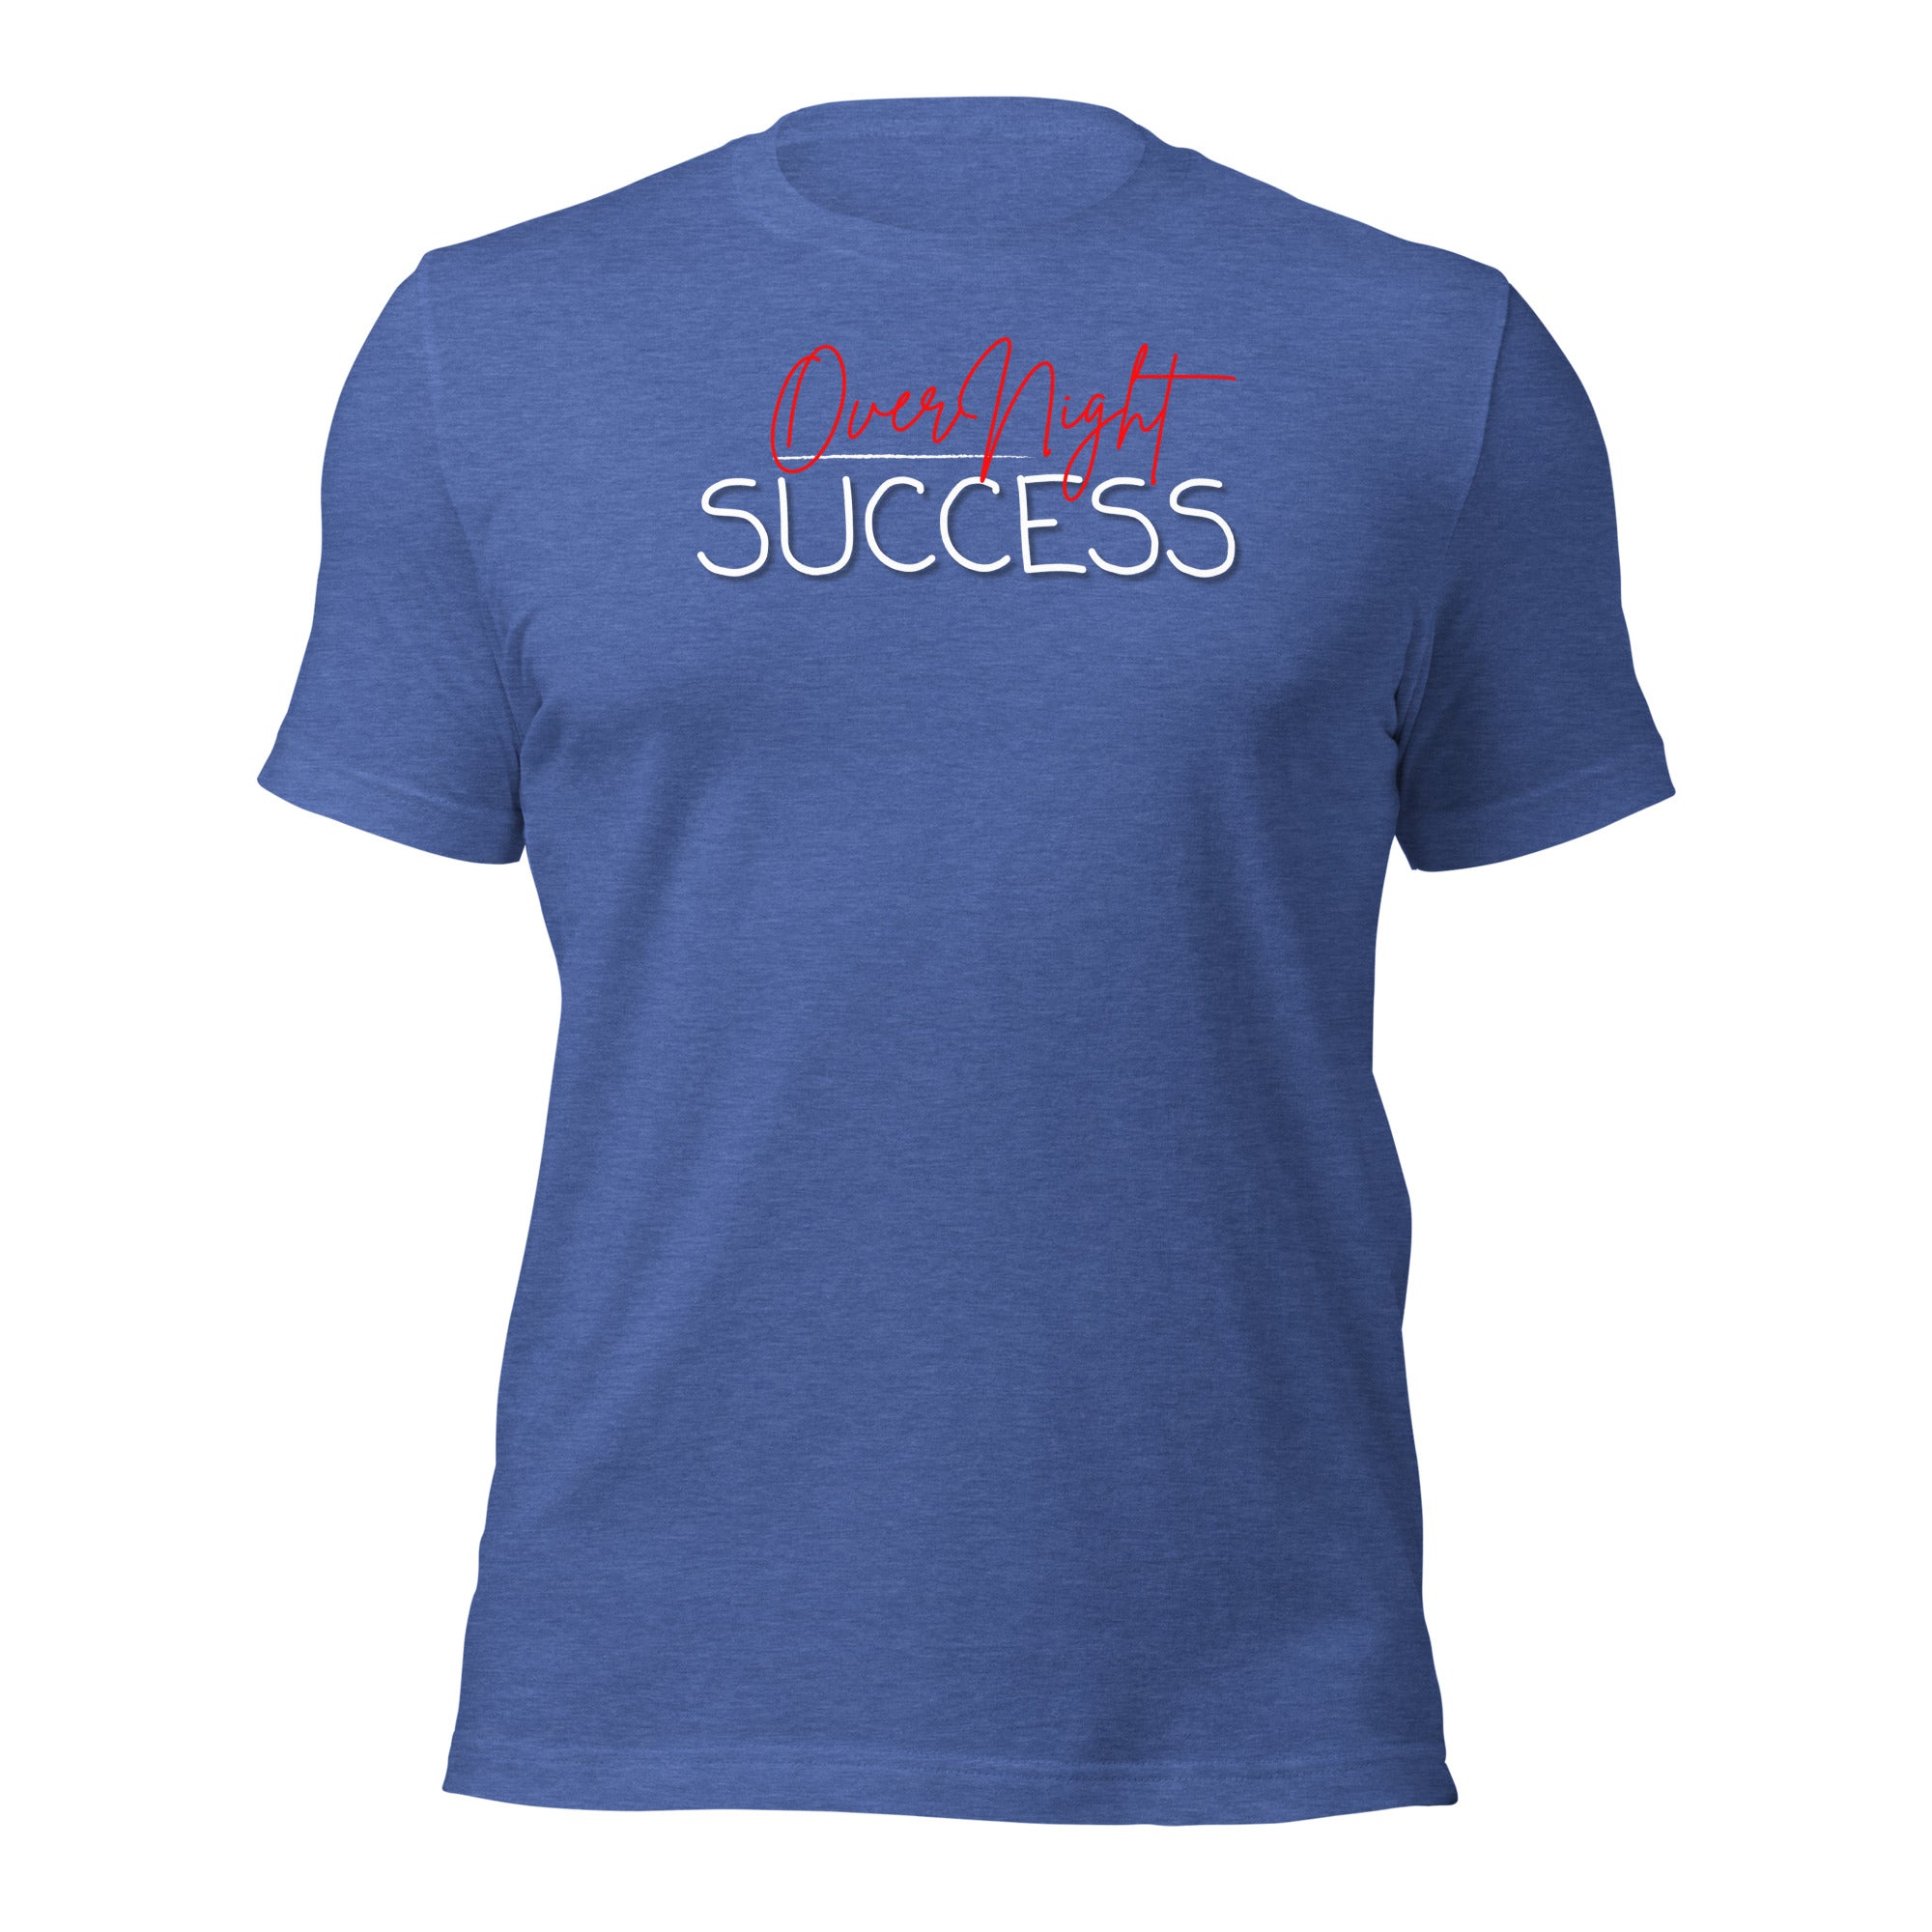 Overnight Success Myth T-Shirt for Entrepreneurs